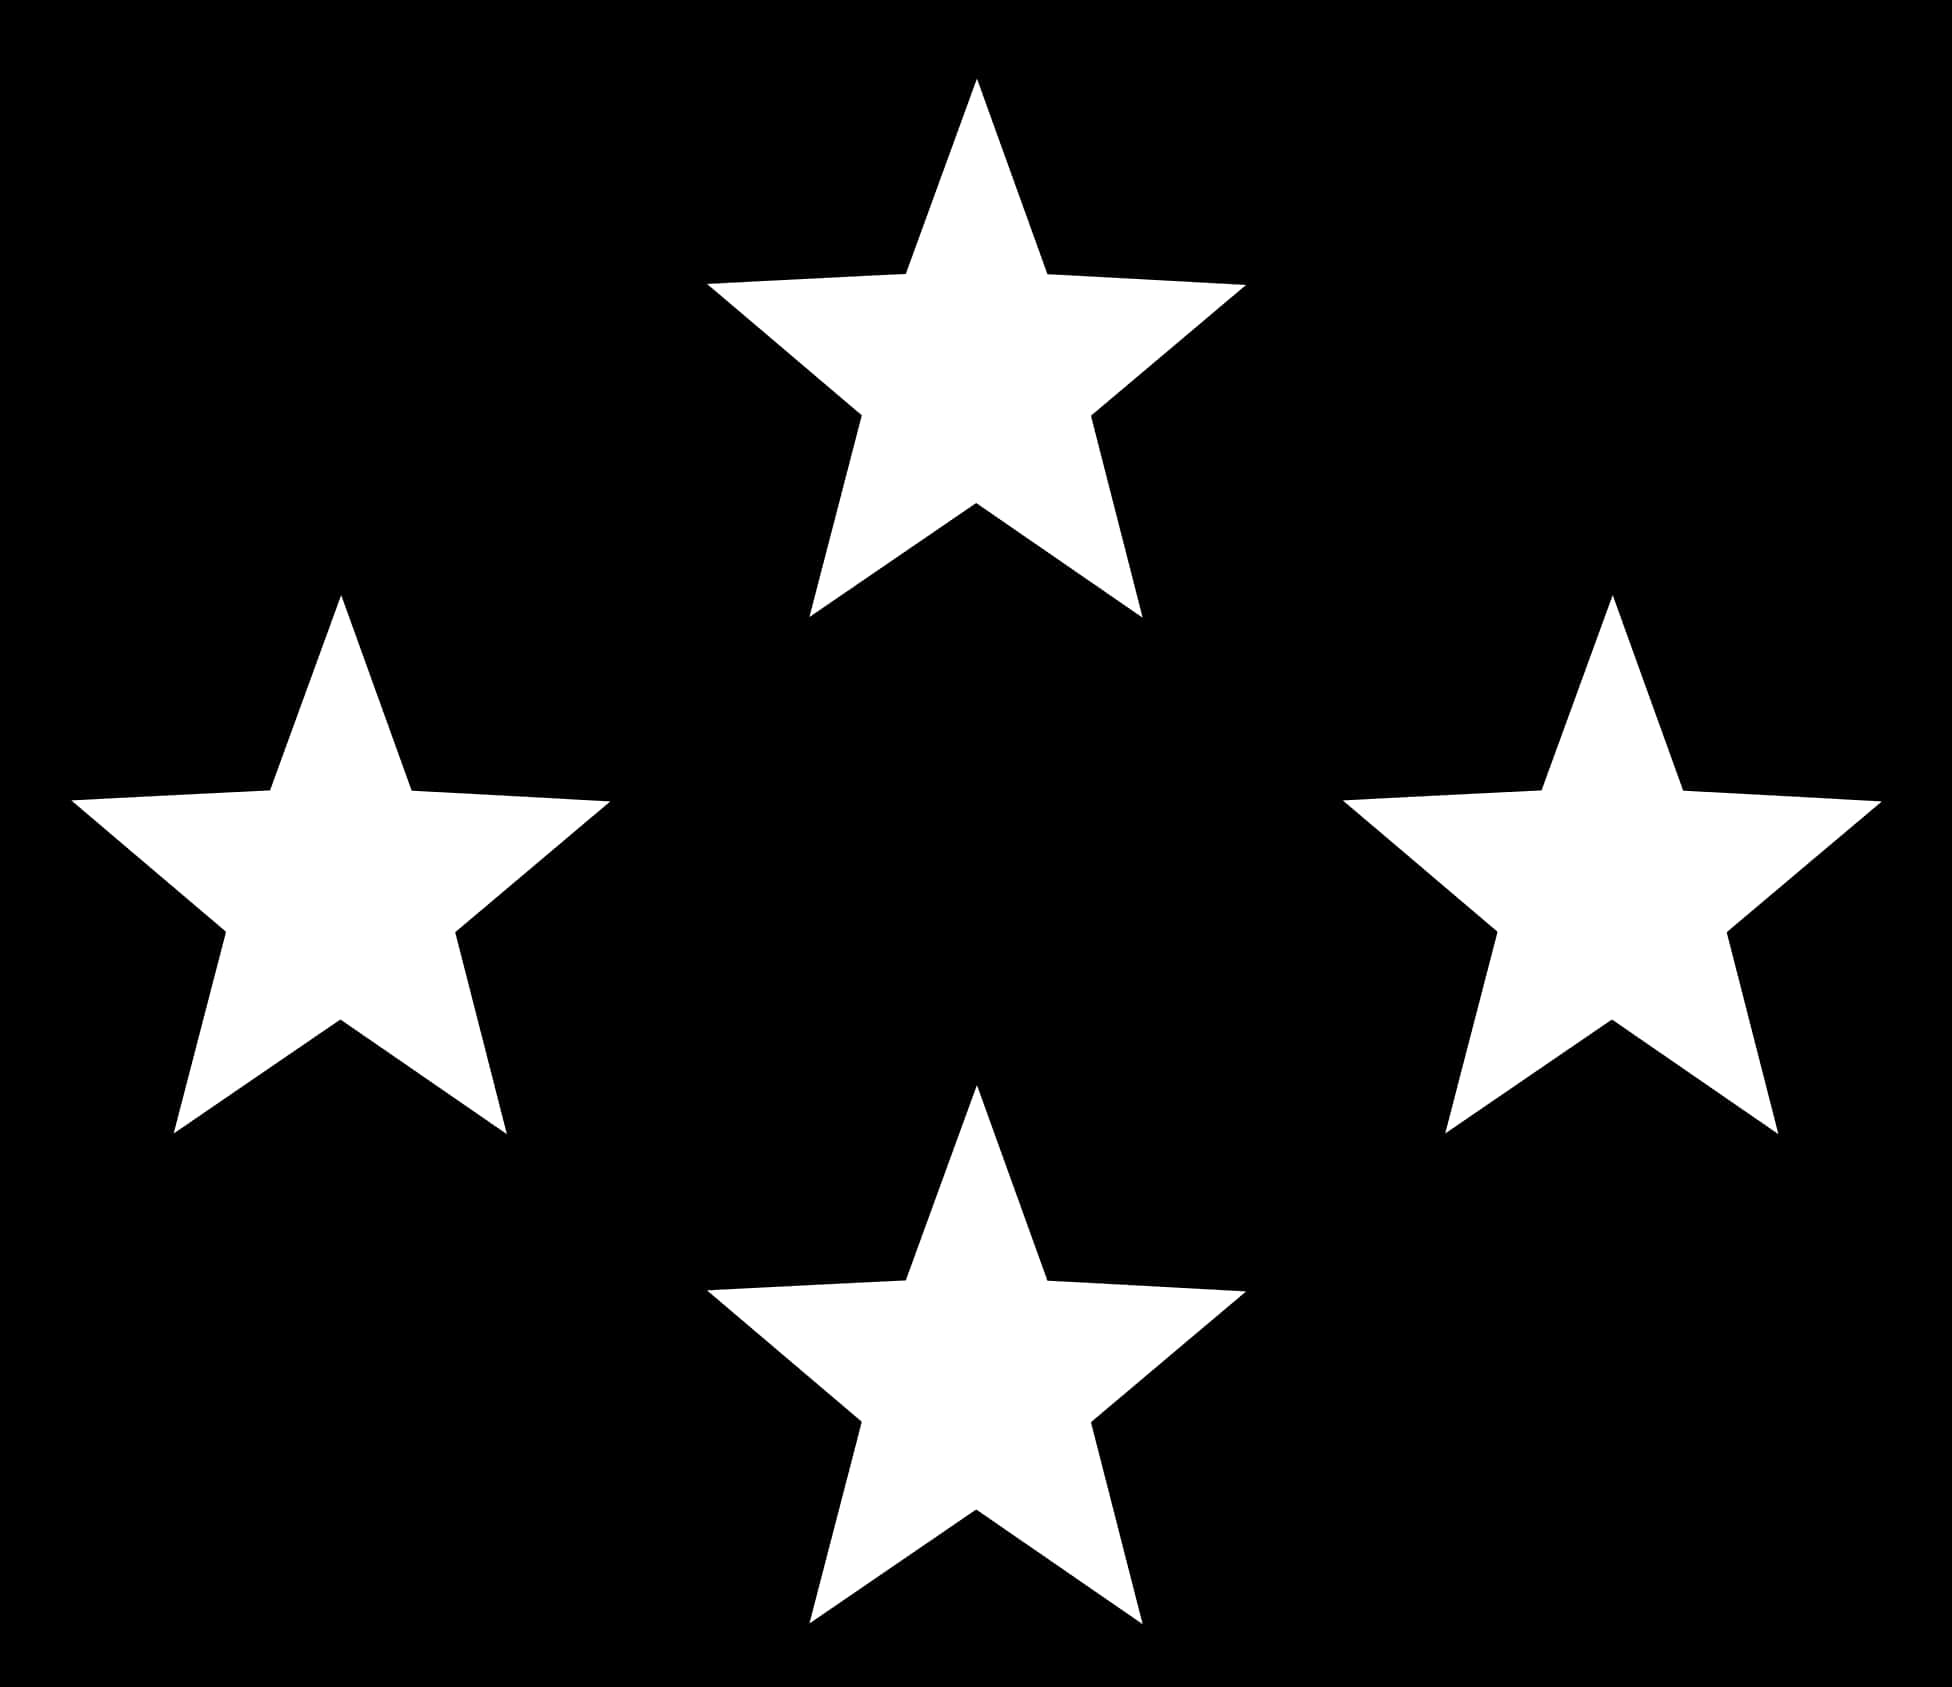 Four White Stars Black Background PNG